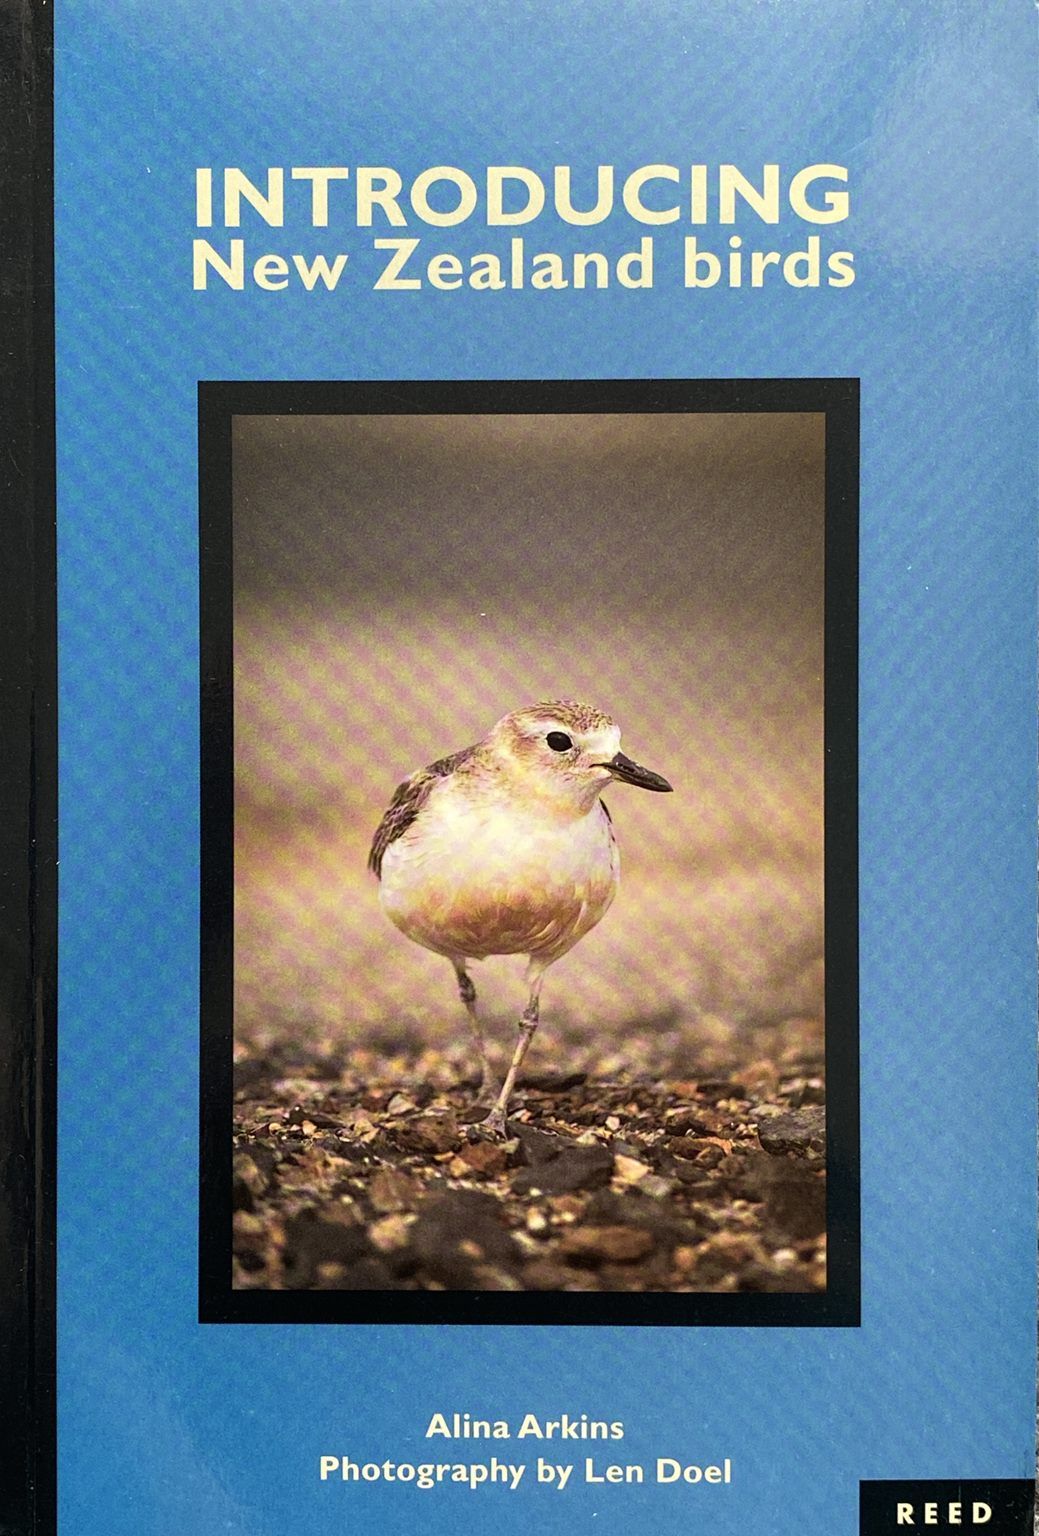 INTRODUCING NEW ZEALAND BIRDS